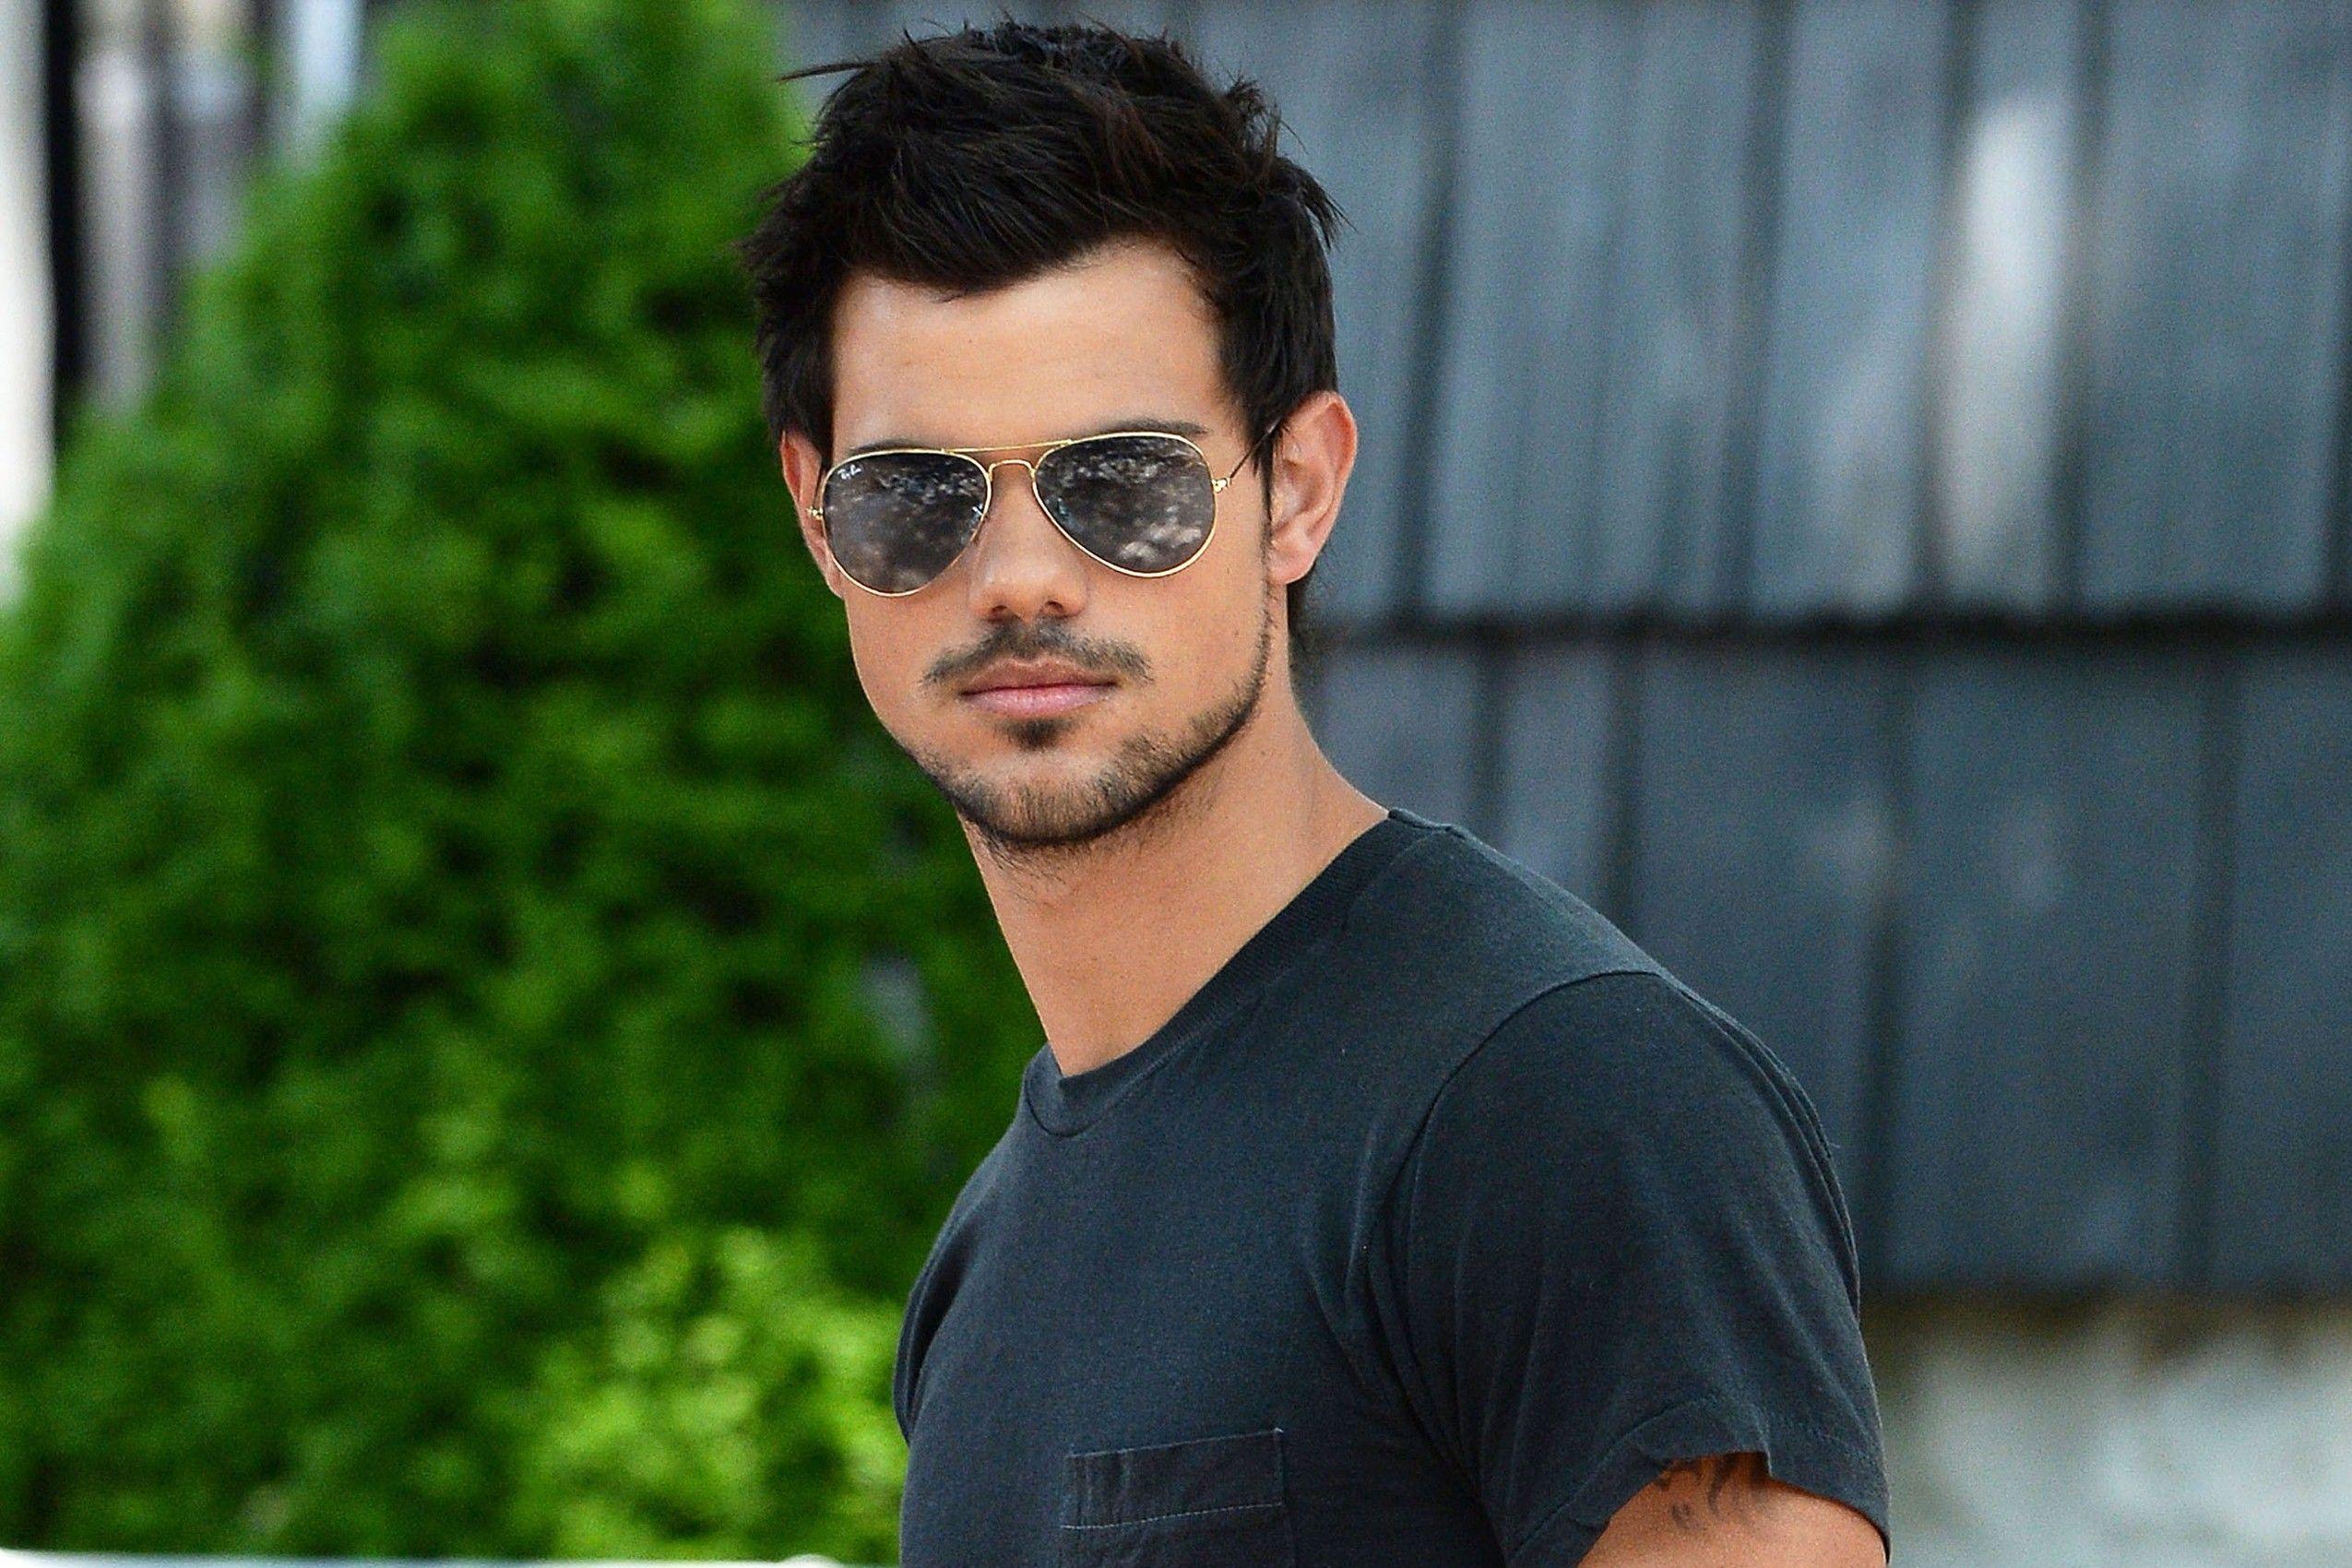 Taylor Lautner Picture, Find best latest Taylor Lautner Picture